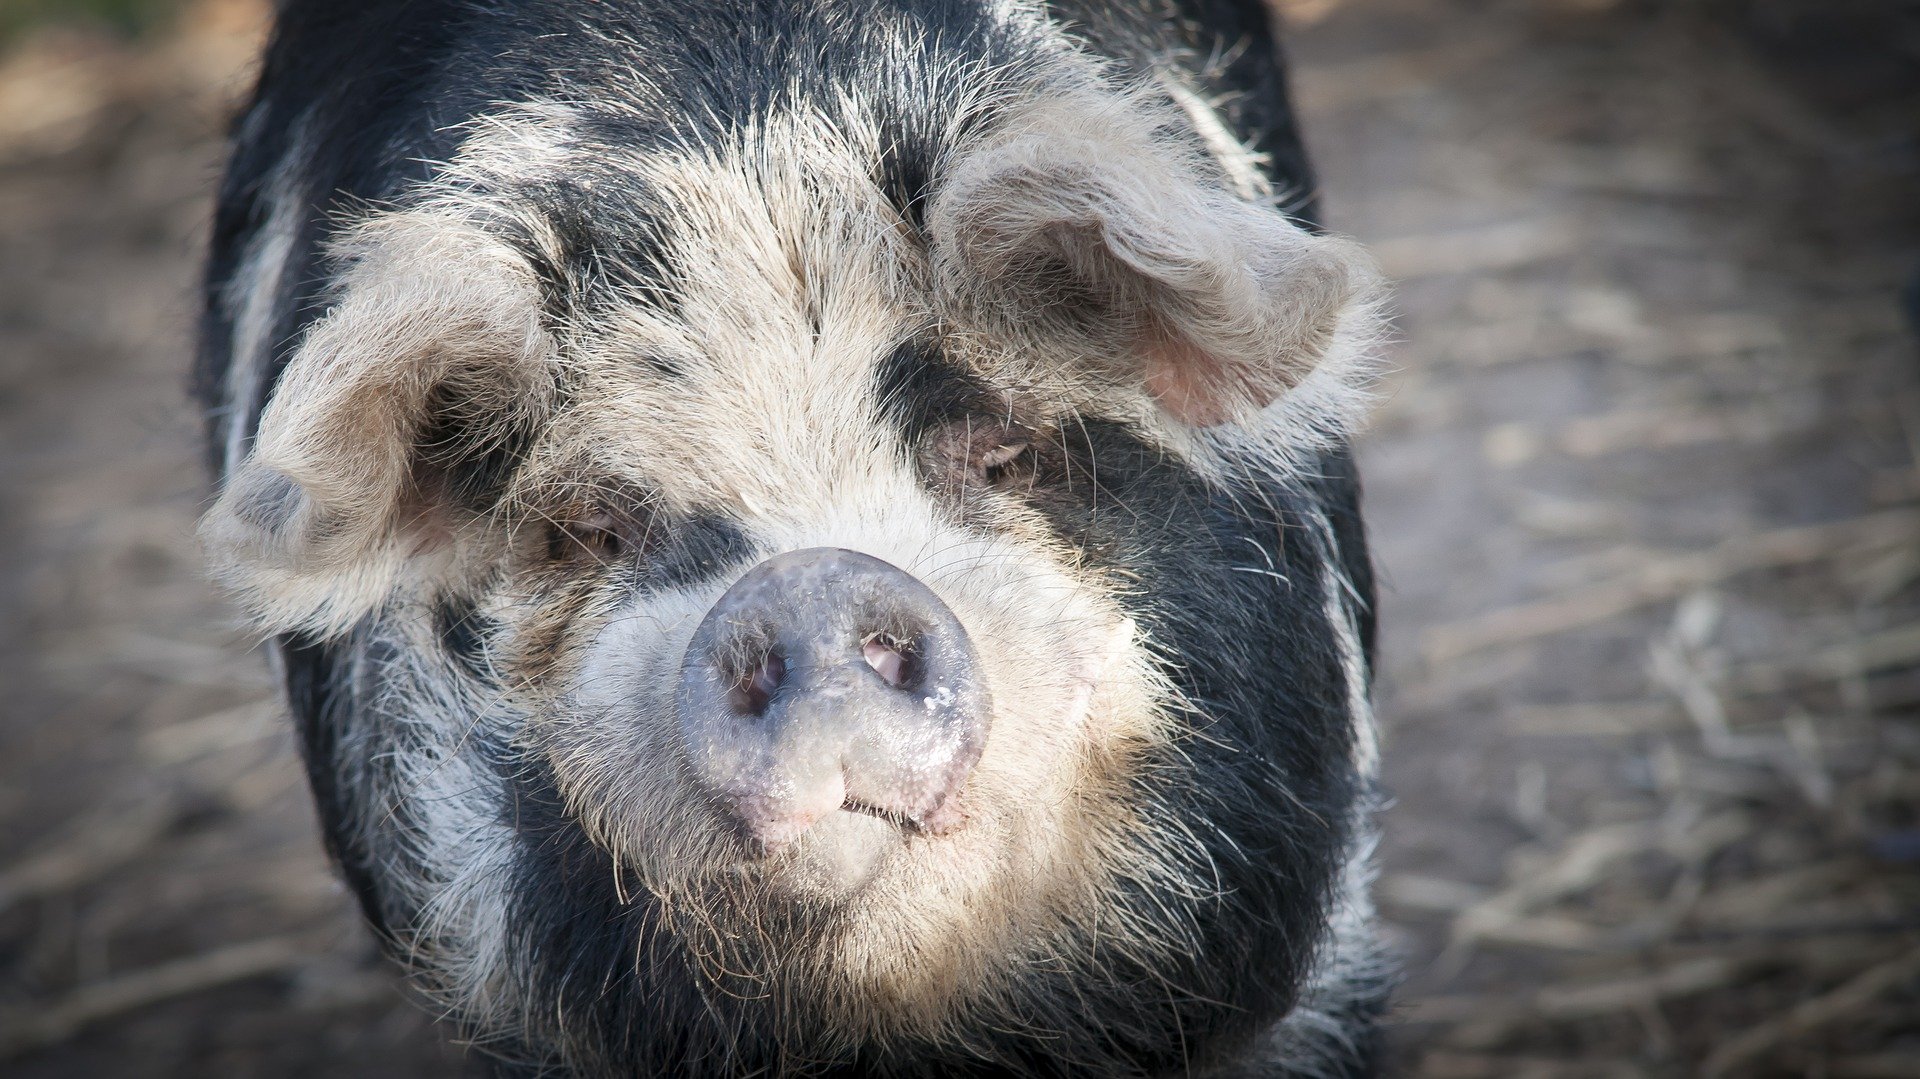 A pet pot belly pig staring at the camera. | Source: Pixabay.